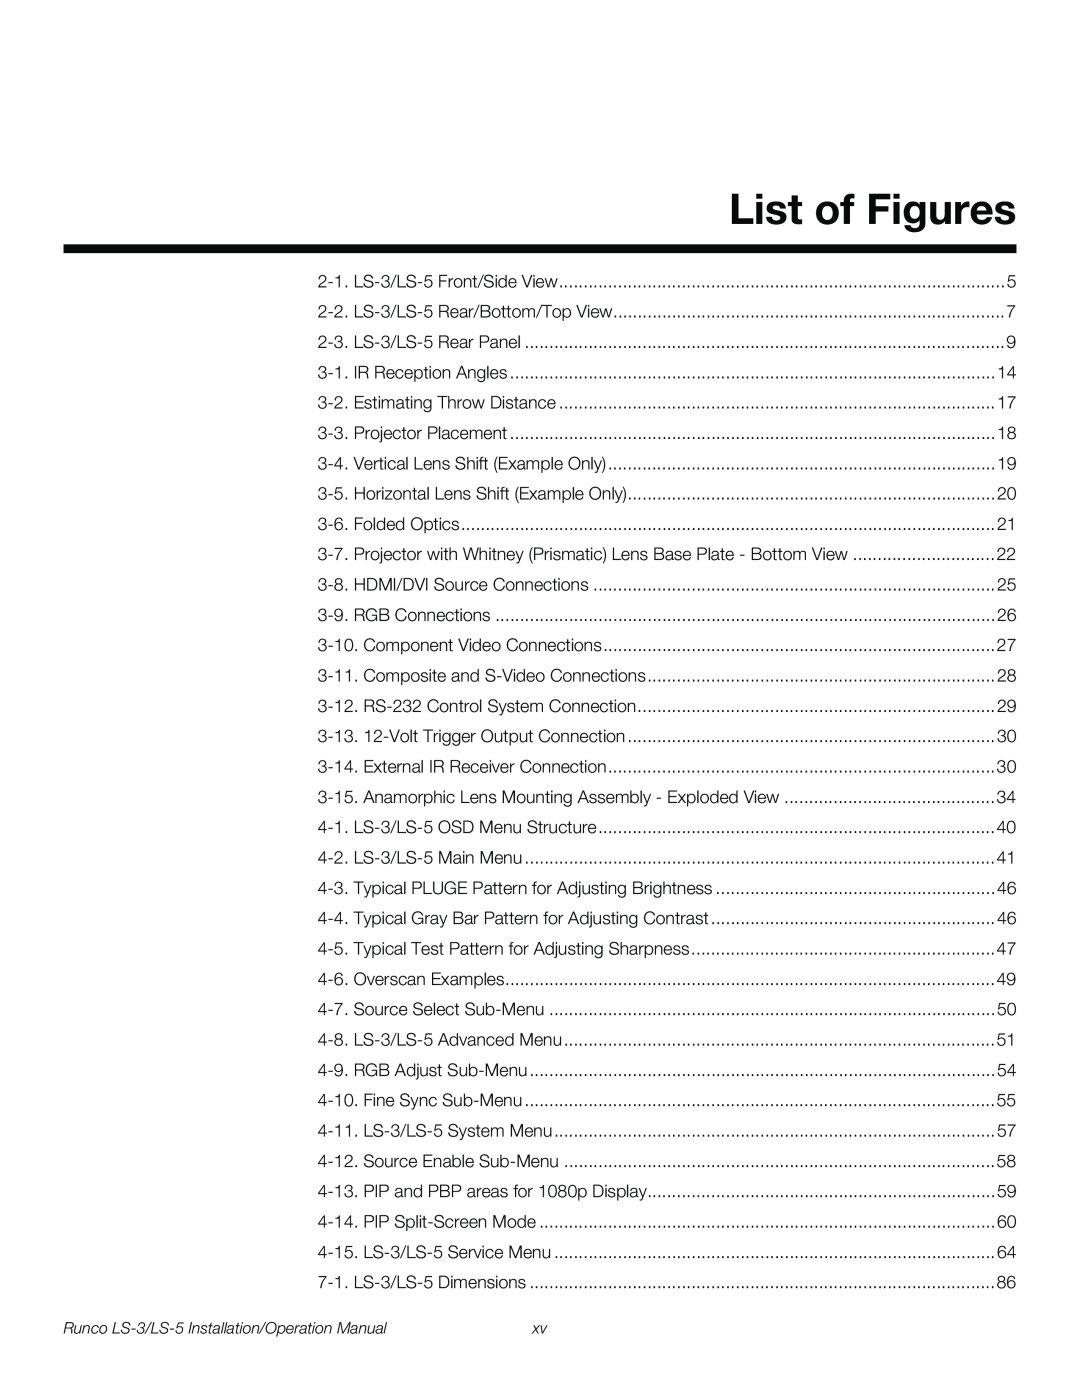 Runco LS-3, LS-5 operation manual List of Figures 